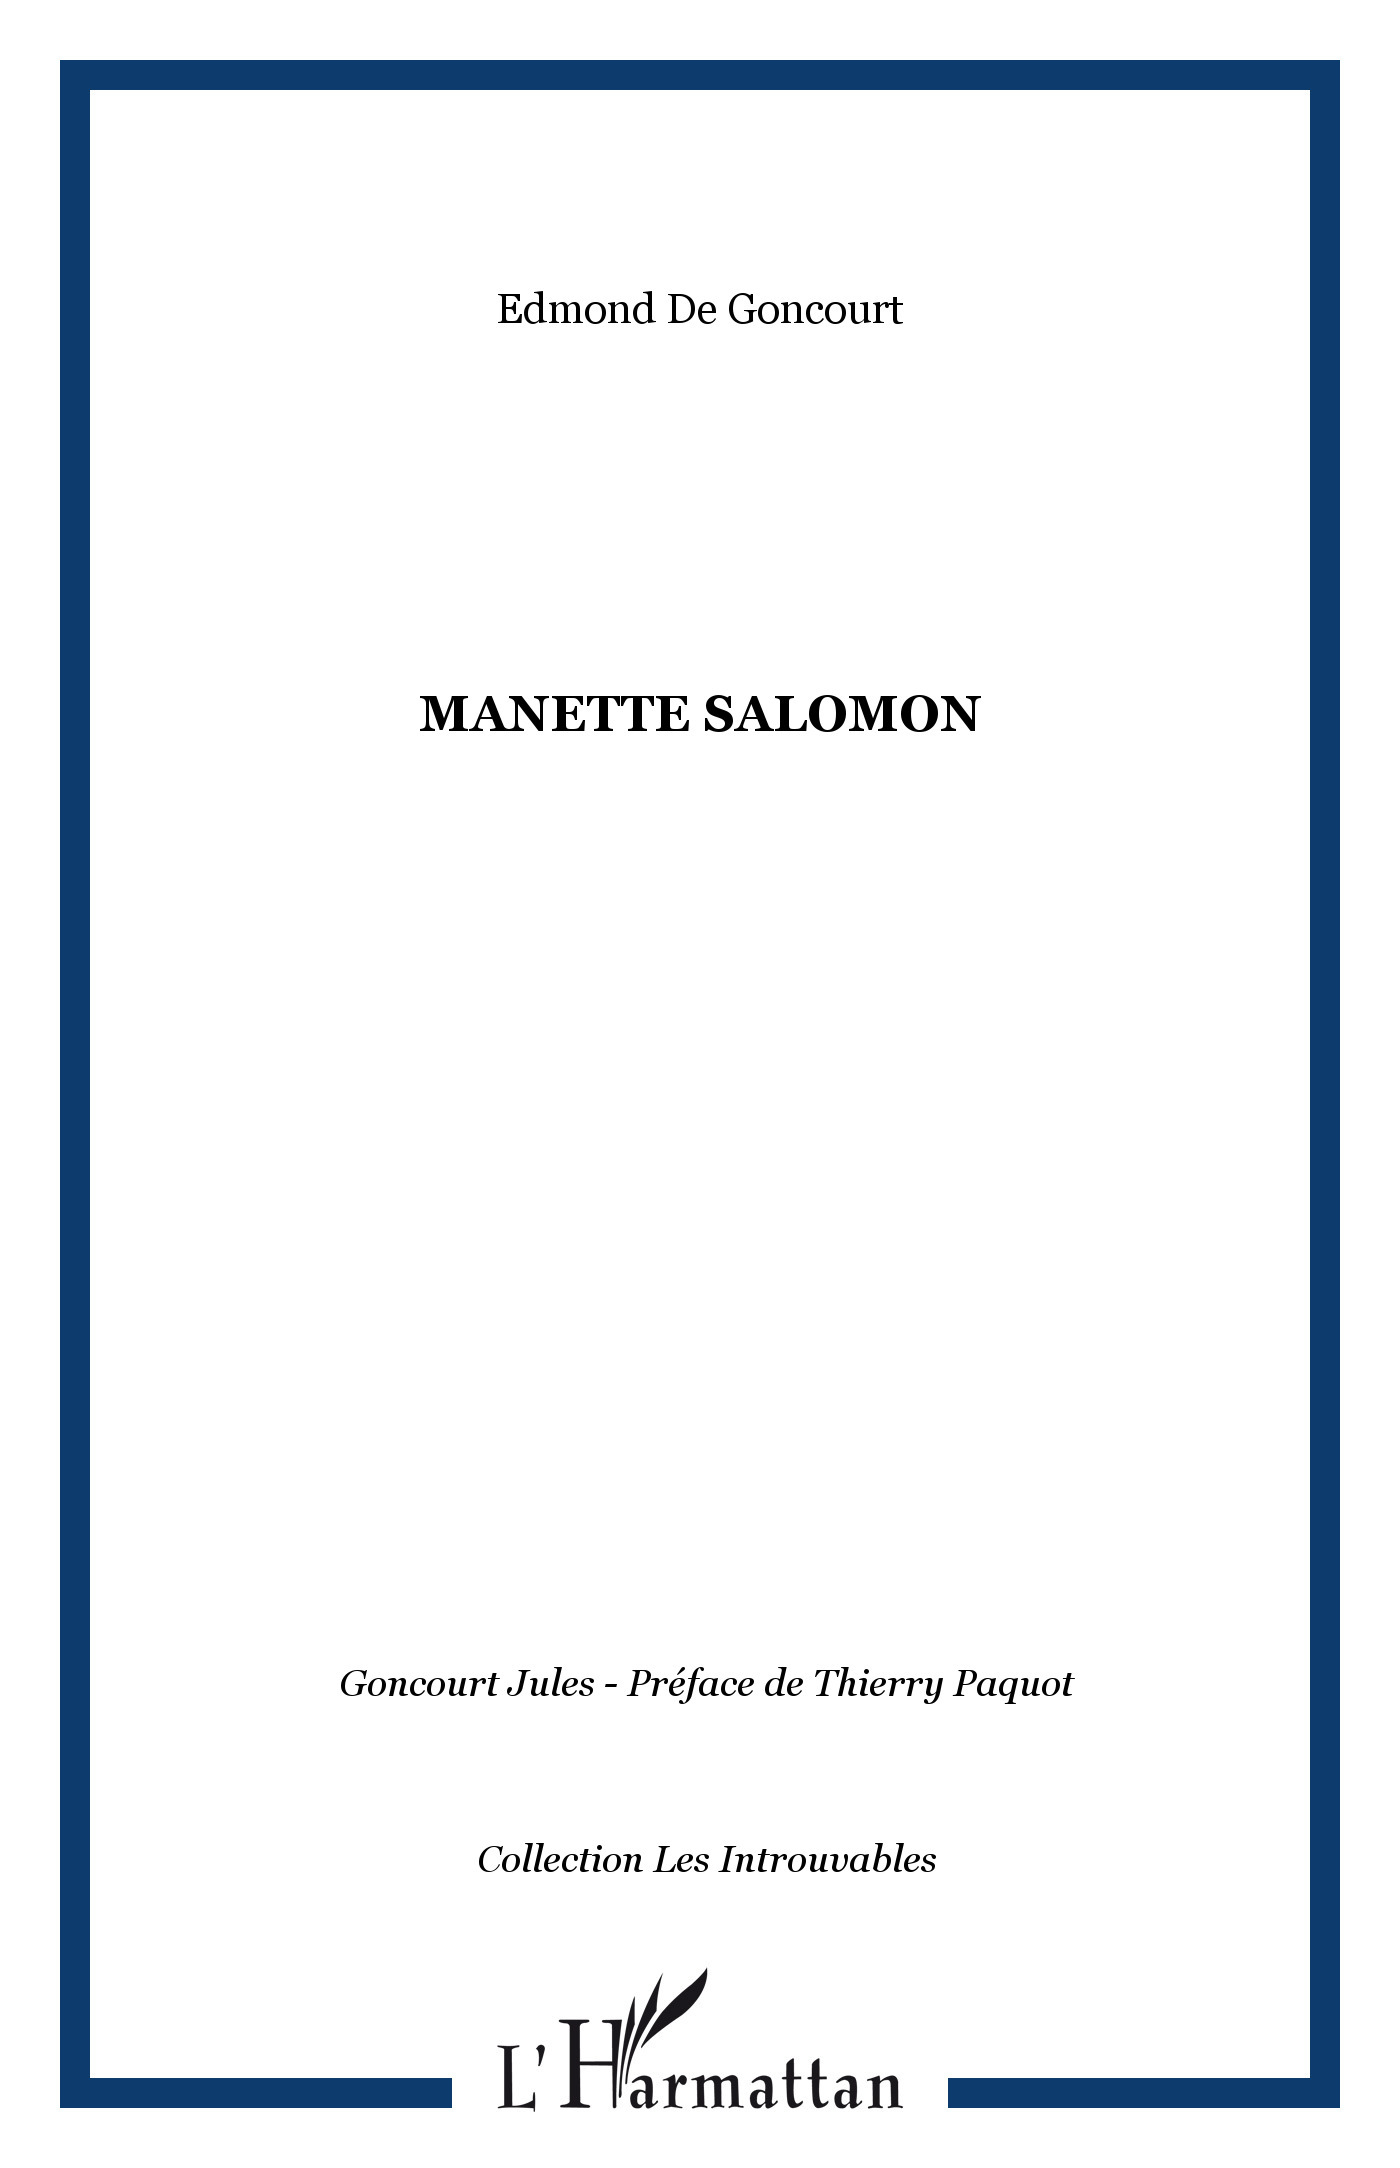 Manette Salomon (9782738420794-front-cover)